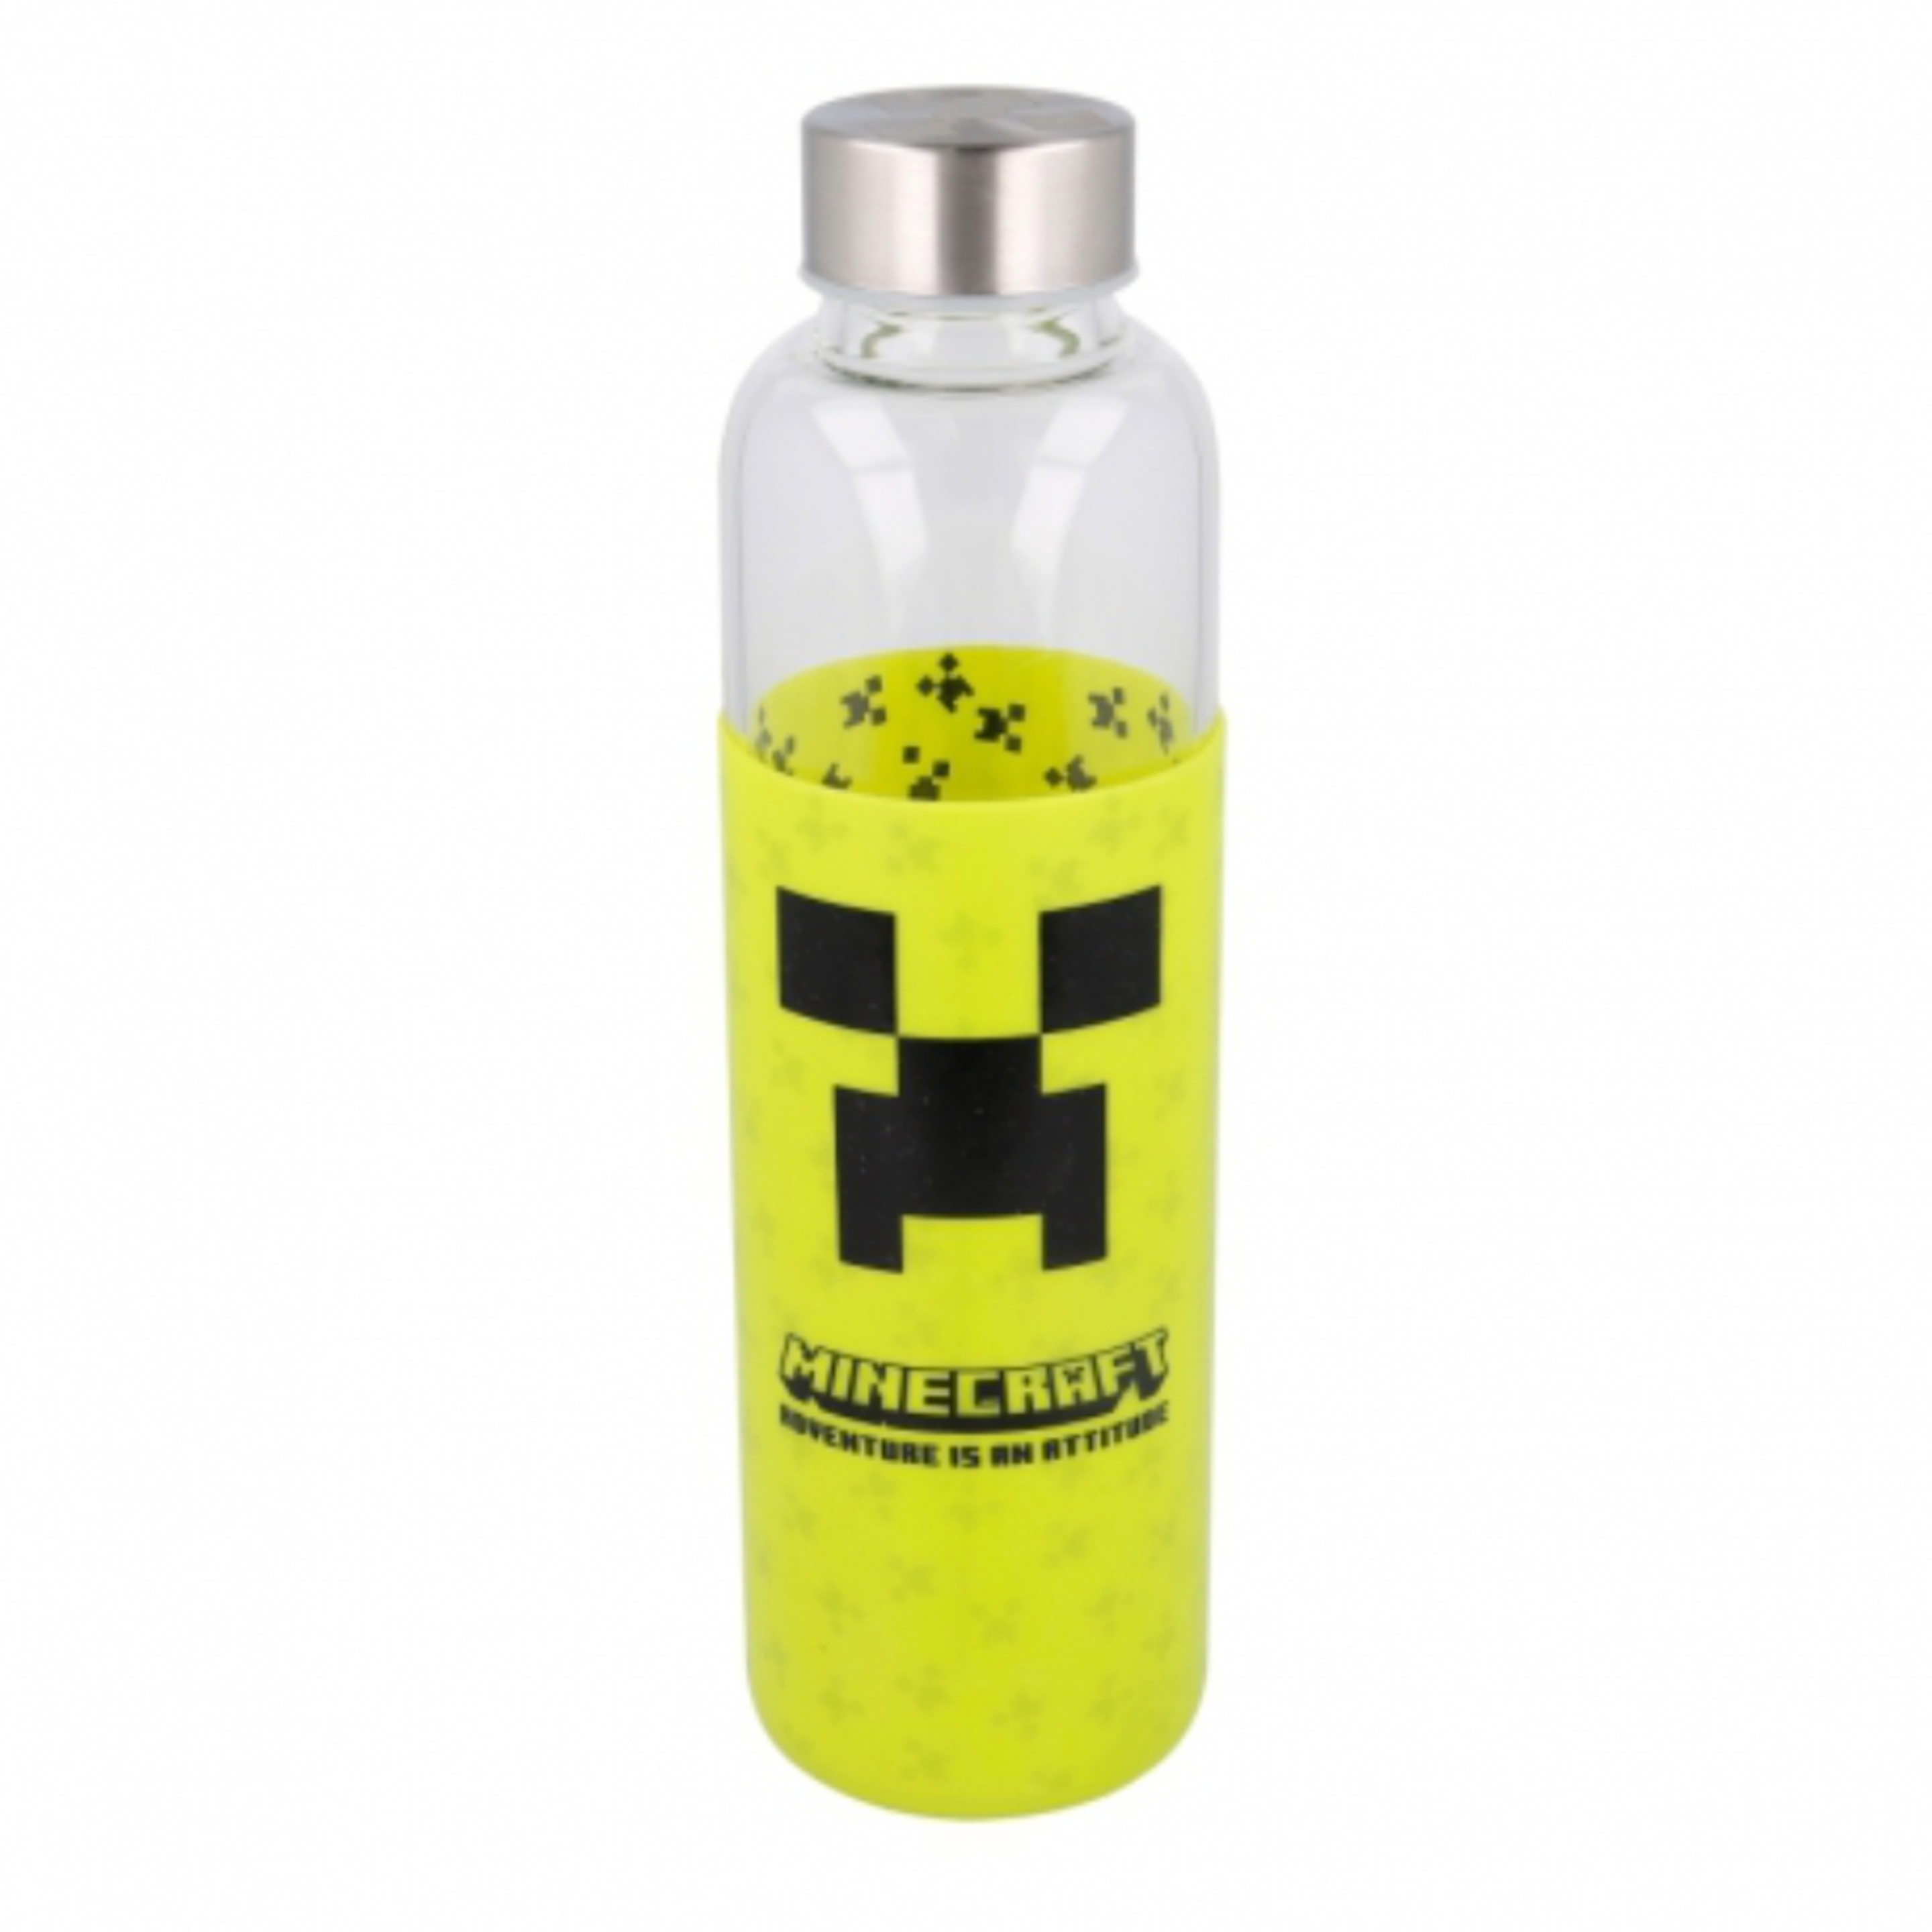 Botella Minecraft 65684 - amarillo - 